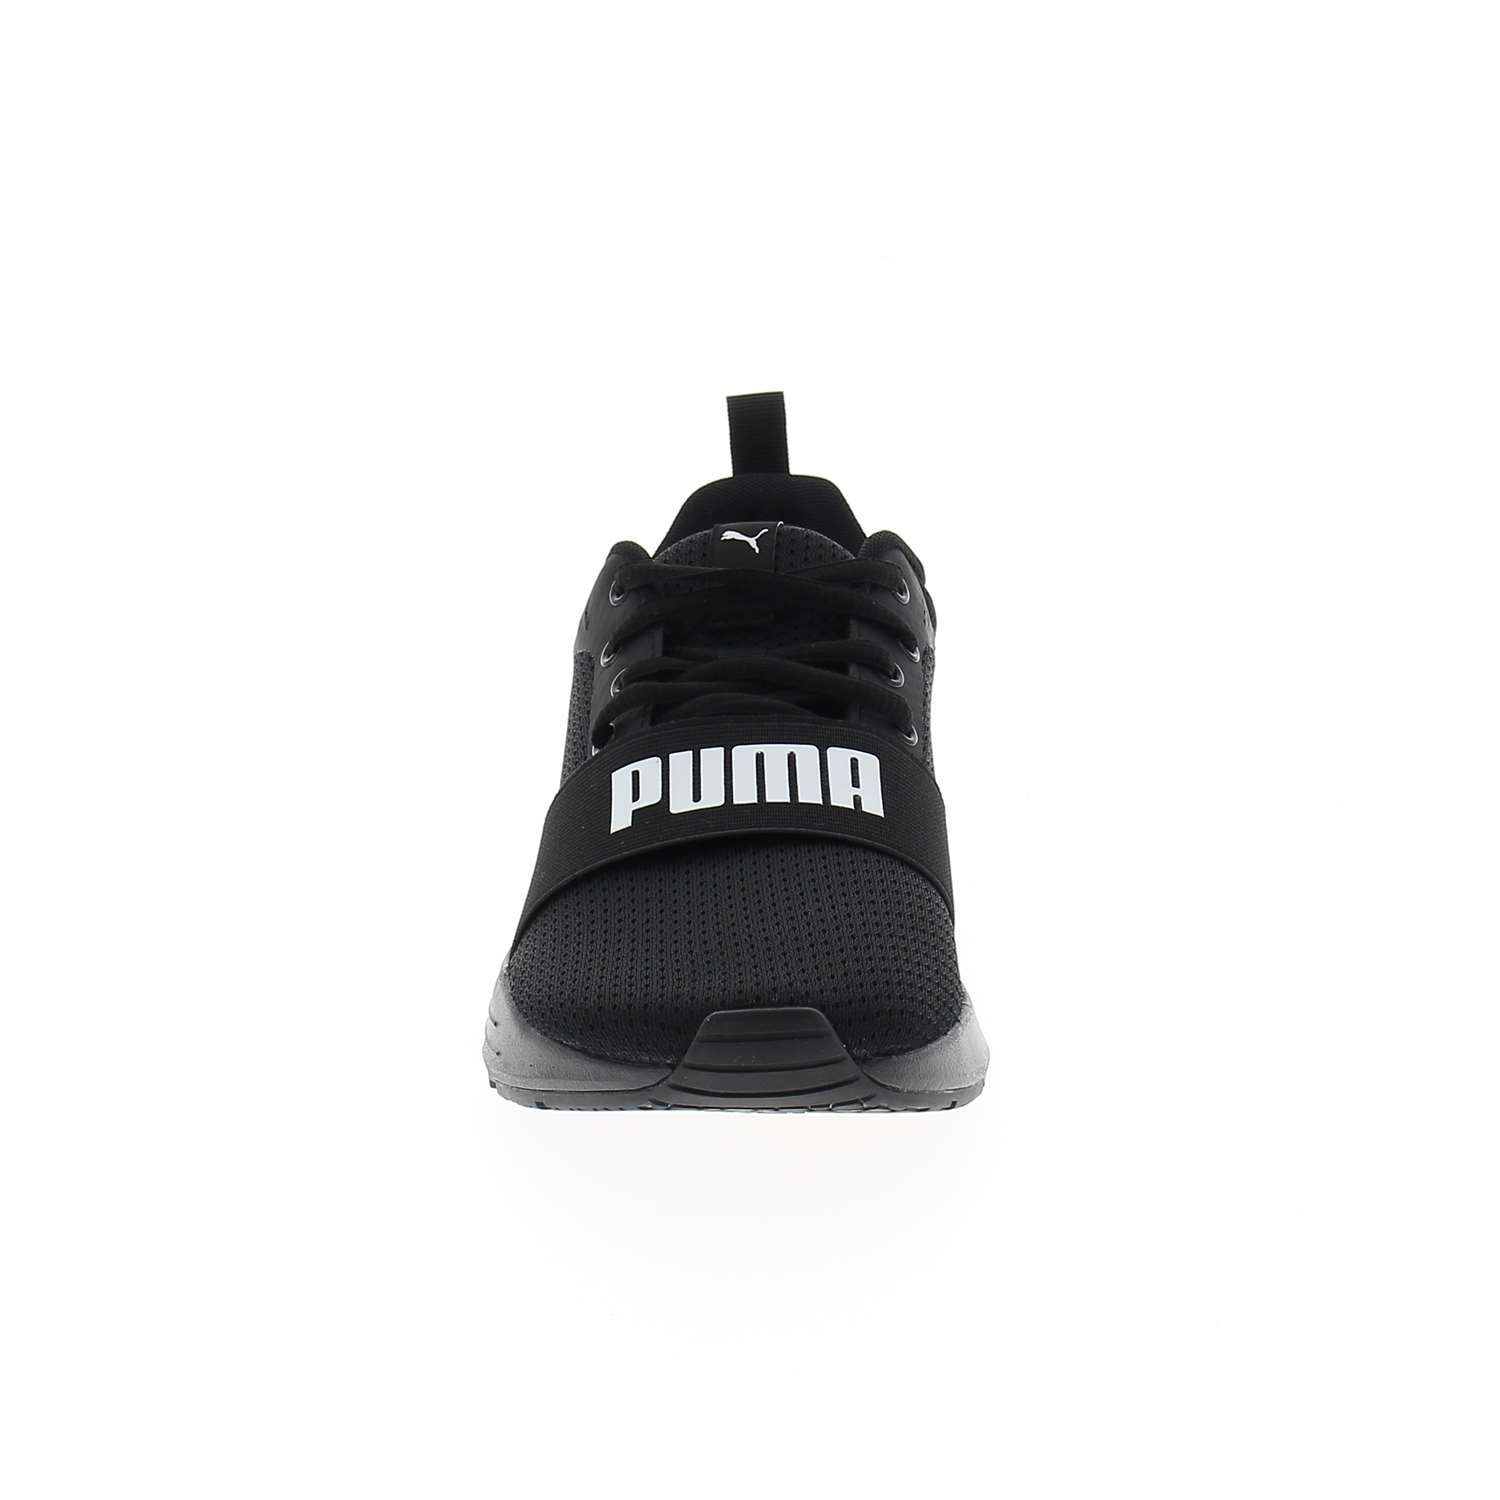 03 - WIRED RUN JR - PUMA - Baskets - Textile